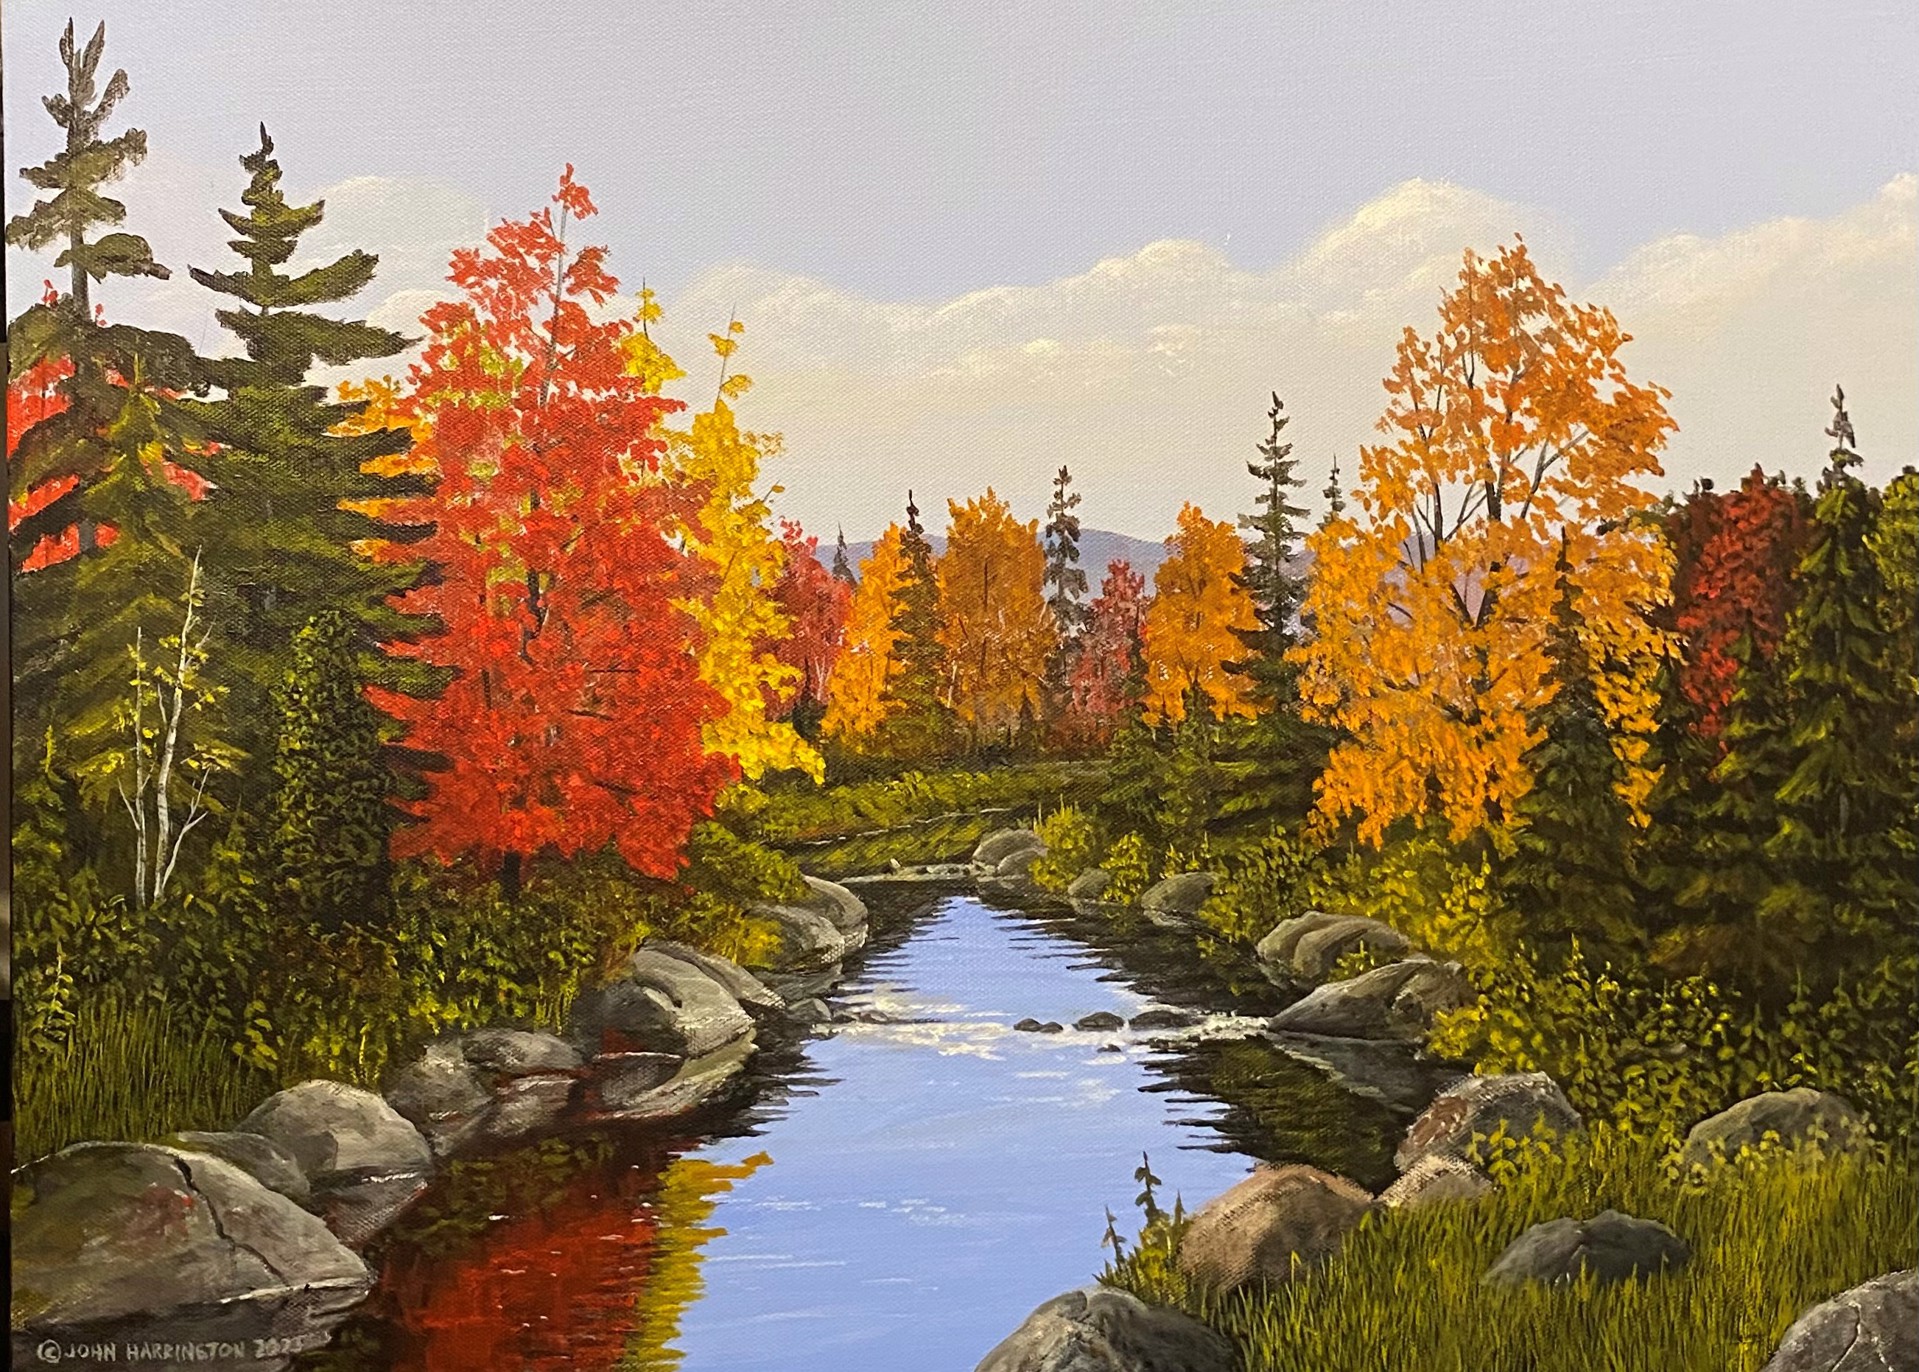 Beaver River by John Harrington